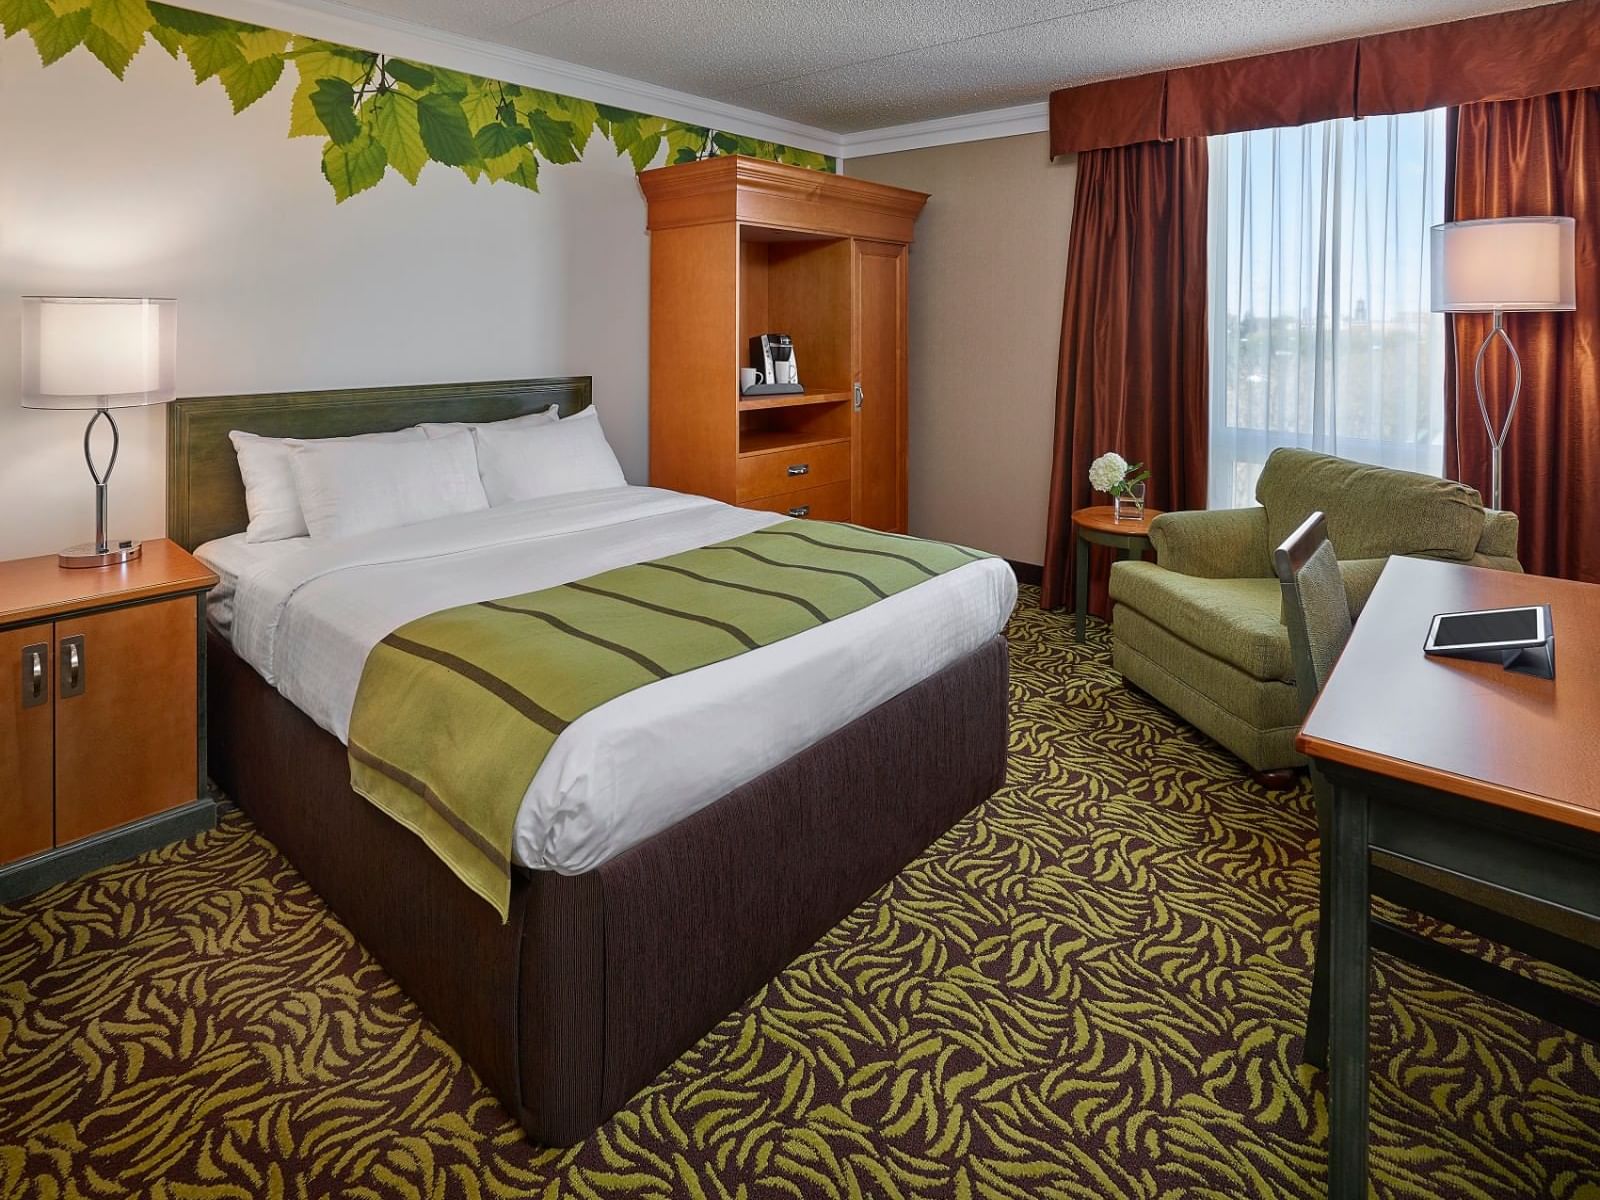 Deluxe Queen Bedroom with queen bed at Varscona Hotel on Whyte